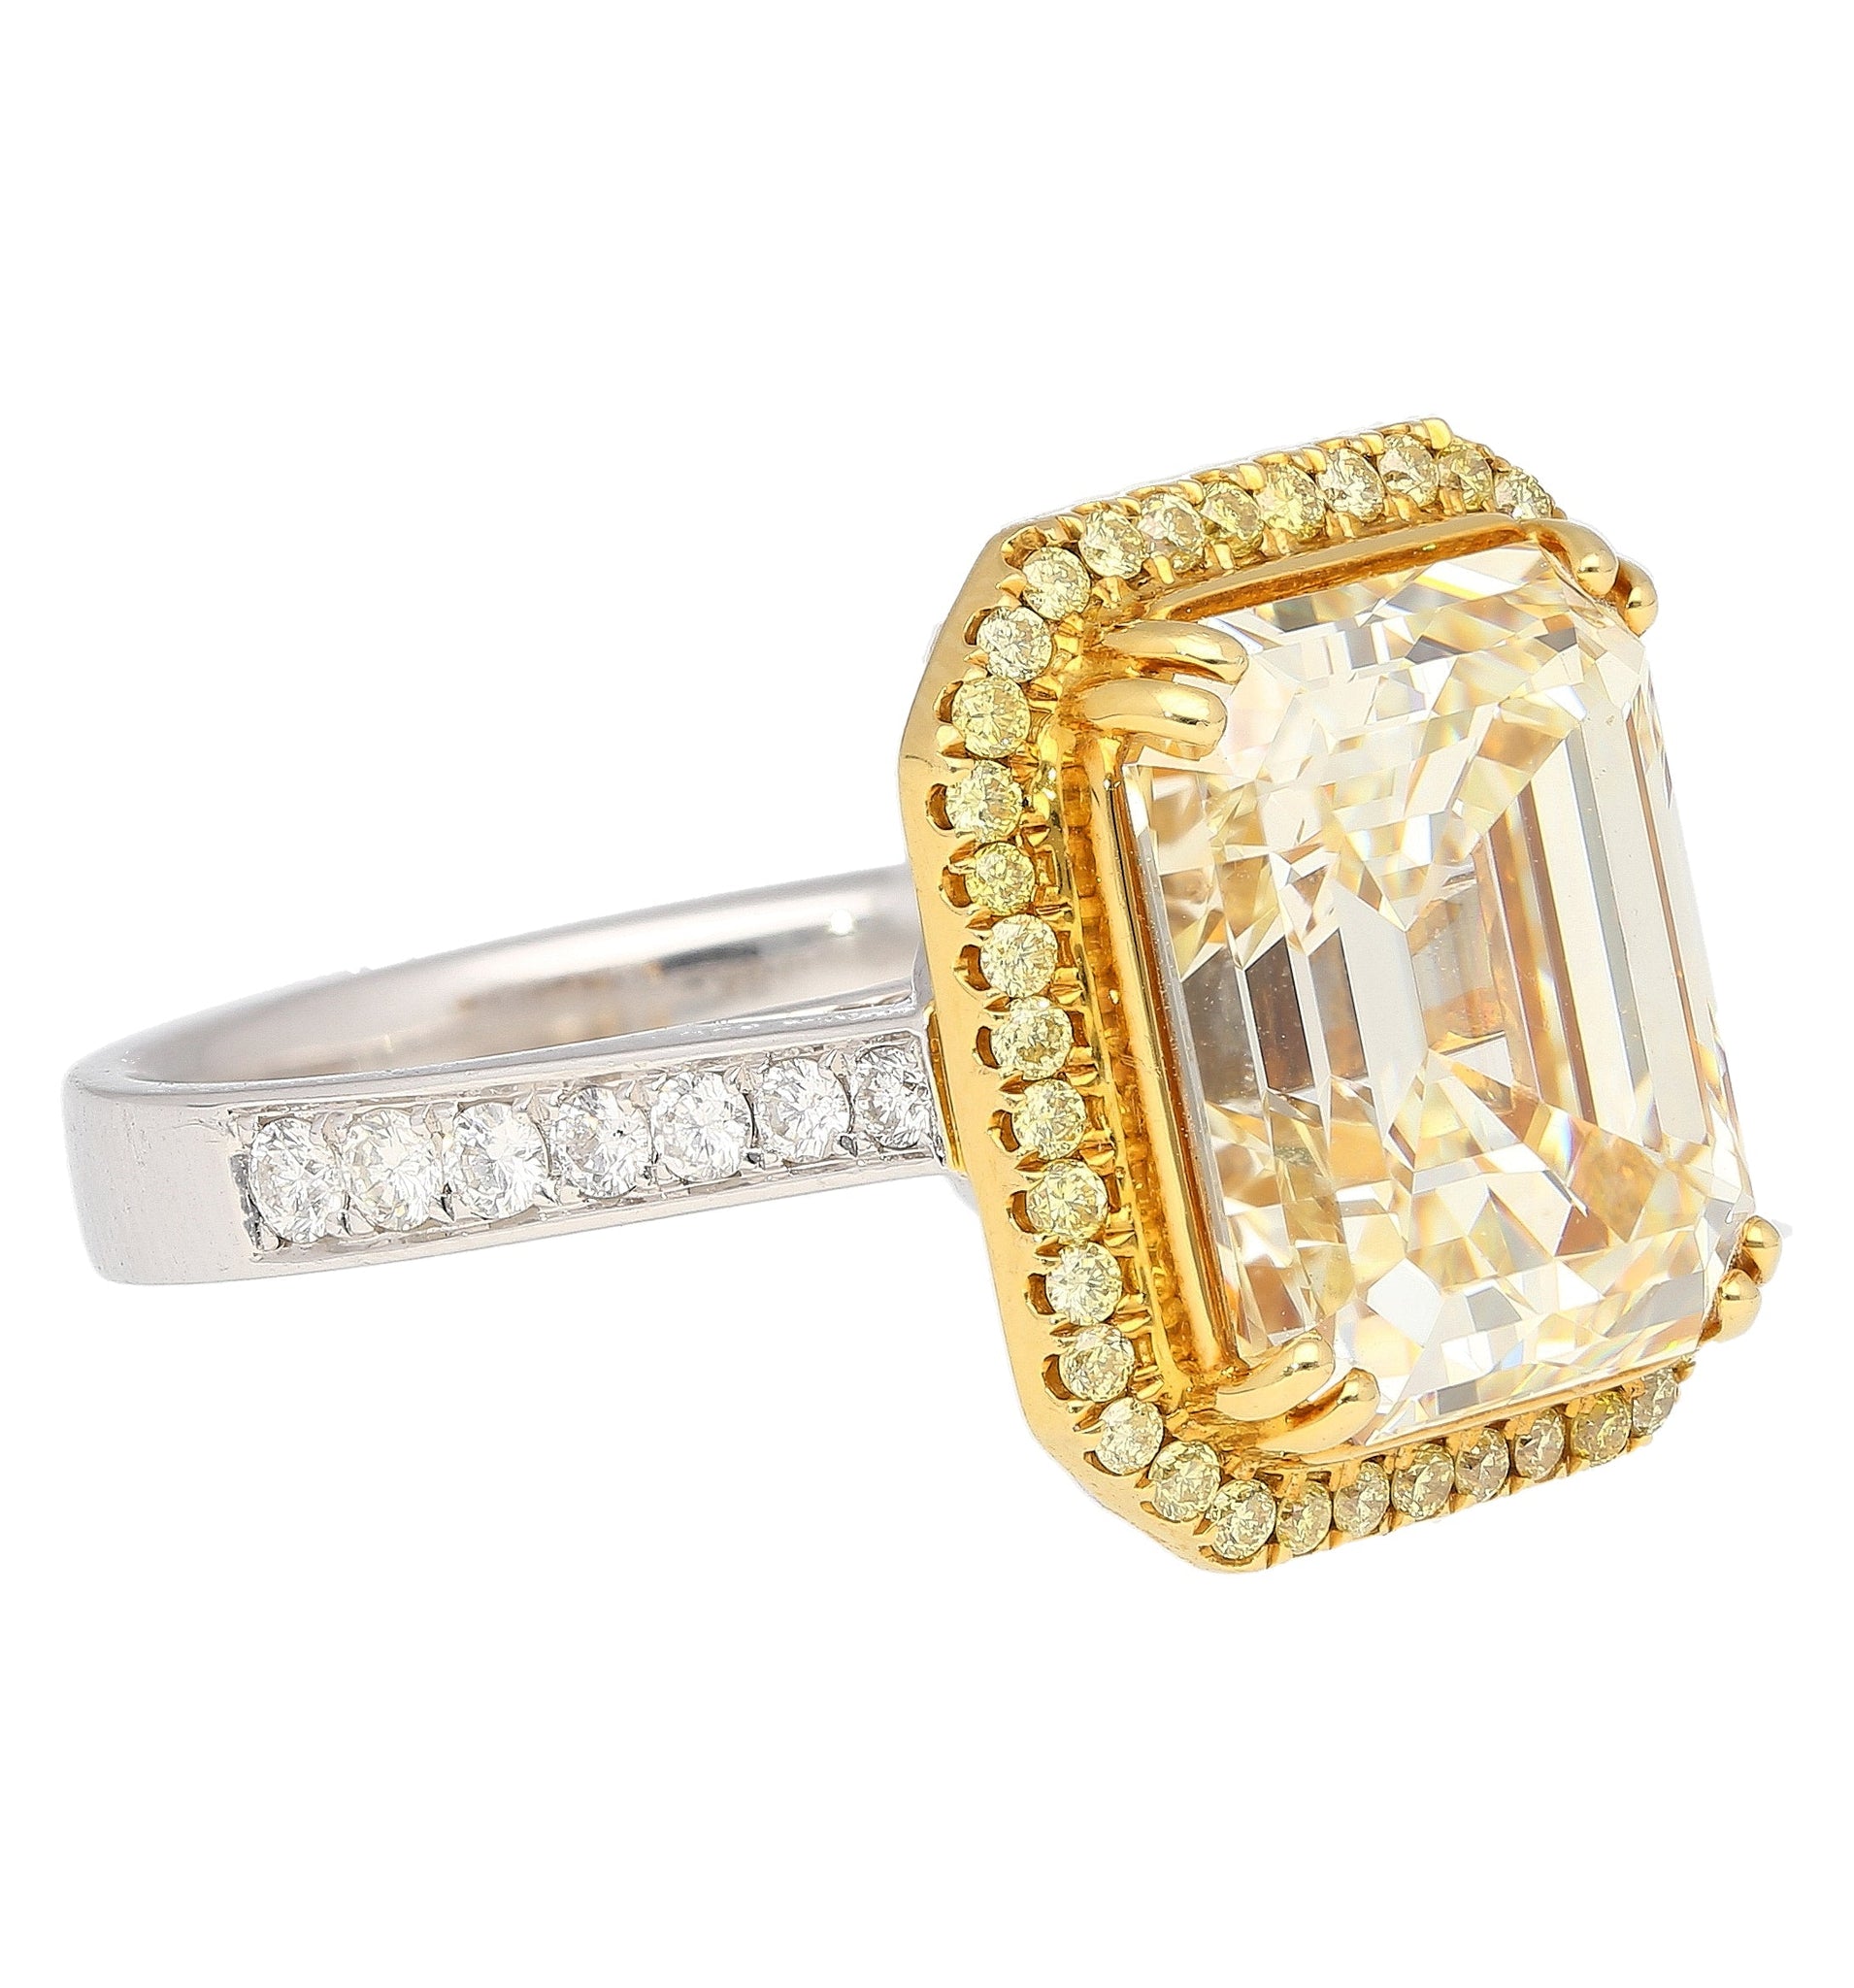 Emerald Cut Natural 7.25 Carat Fancy Light Yellow Diamond with Round Diamond Halo Ring